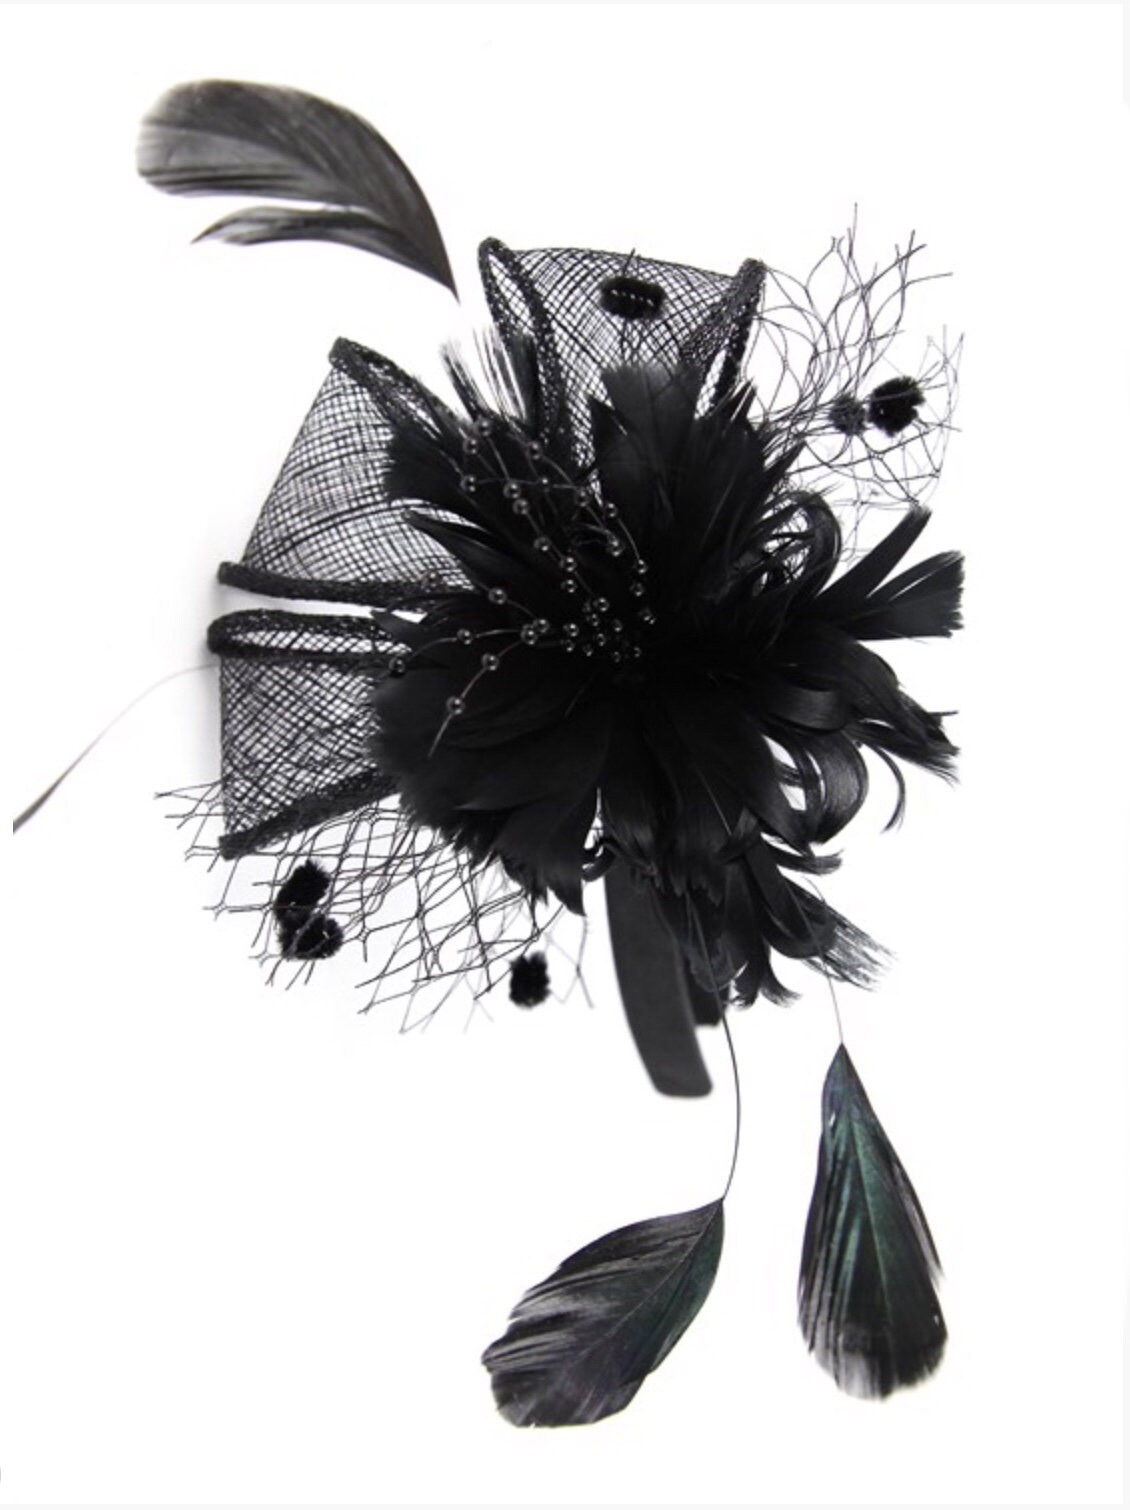 Black noir charcoal Fascinator hat Fascinators | Etsy